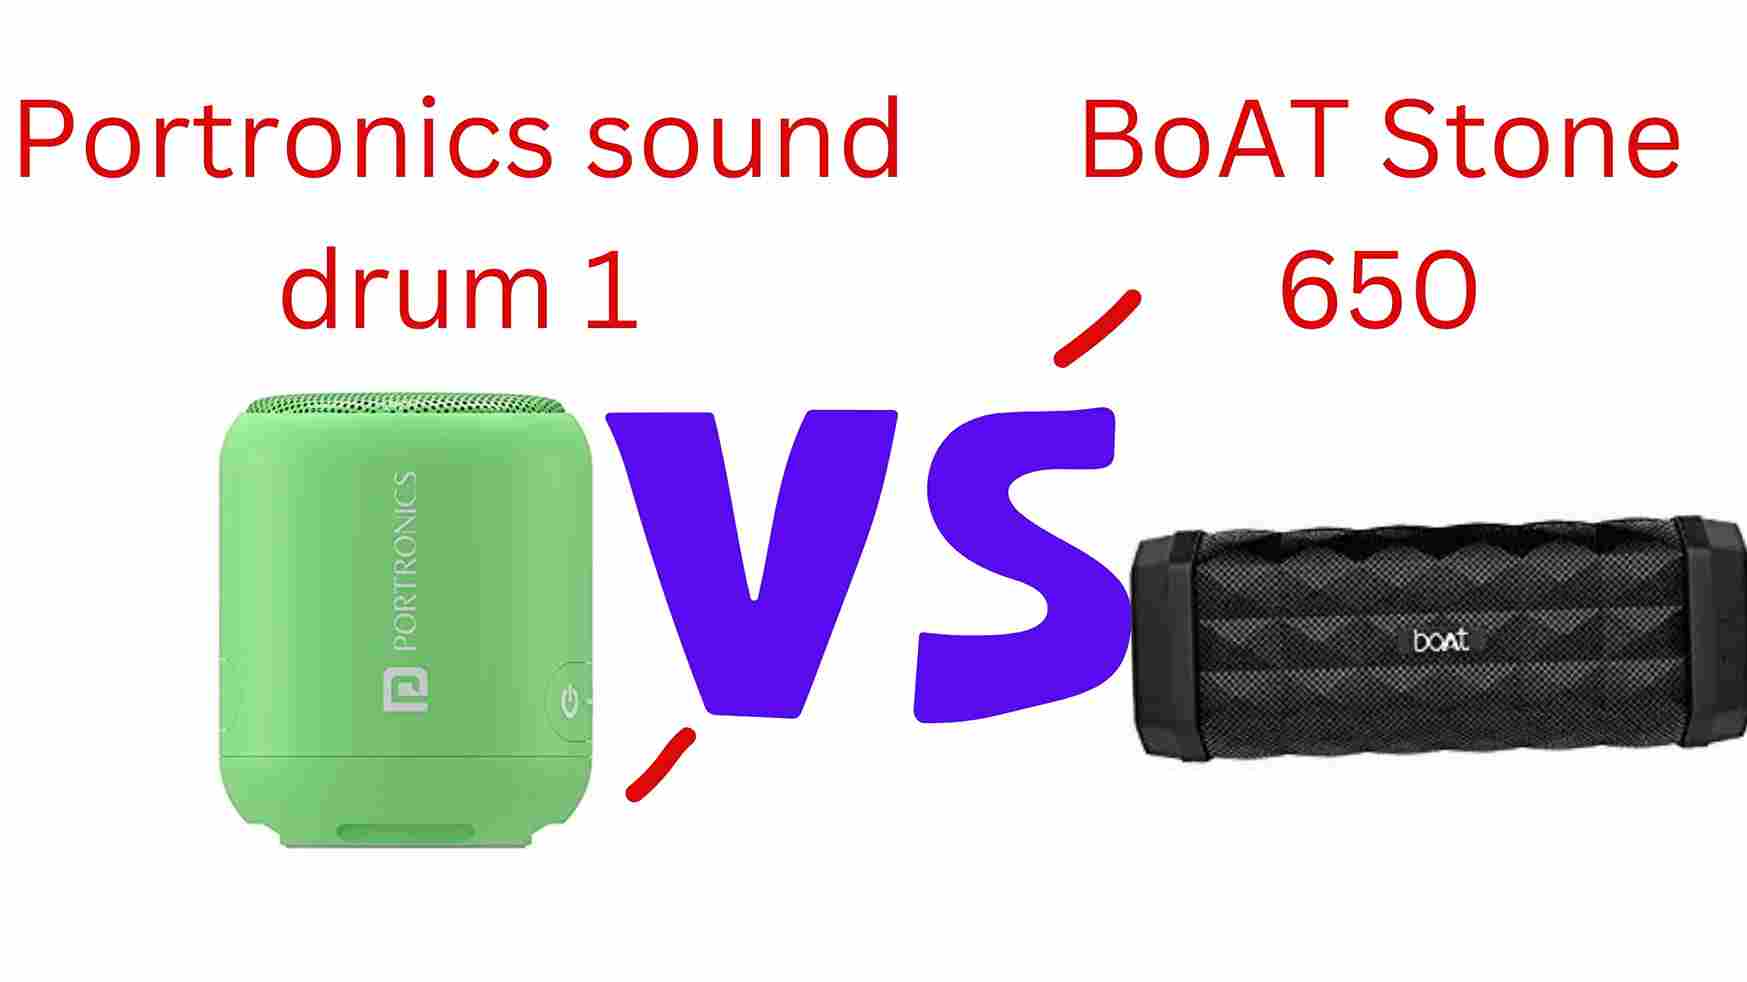 Boat Stone 650 vs Portronics Sound Drum 1